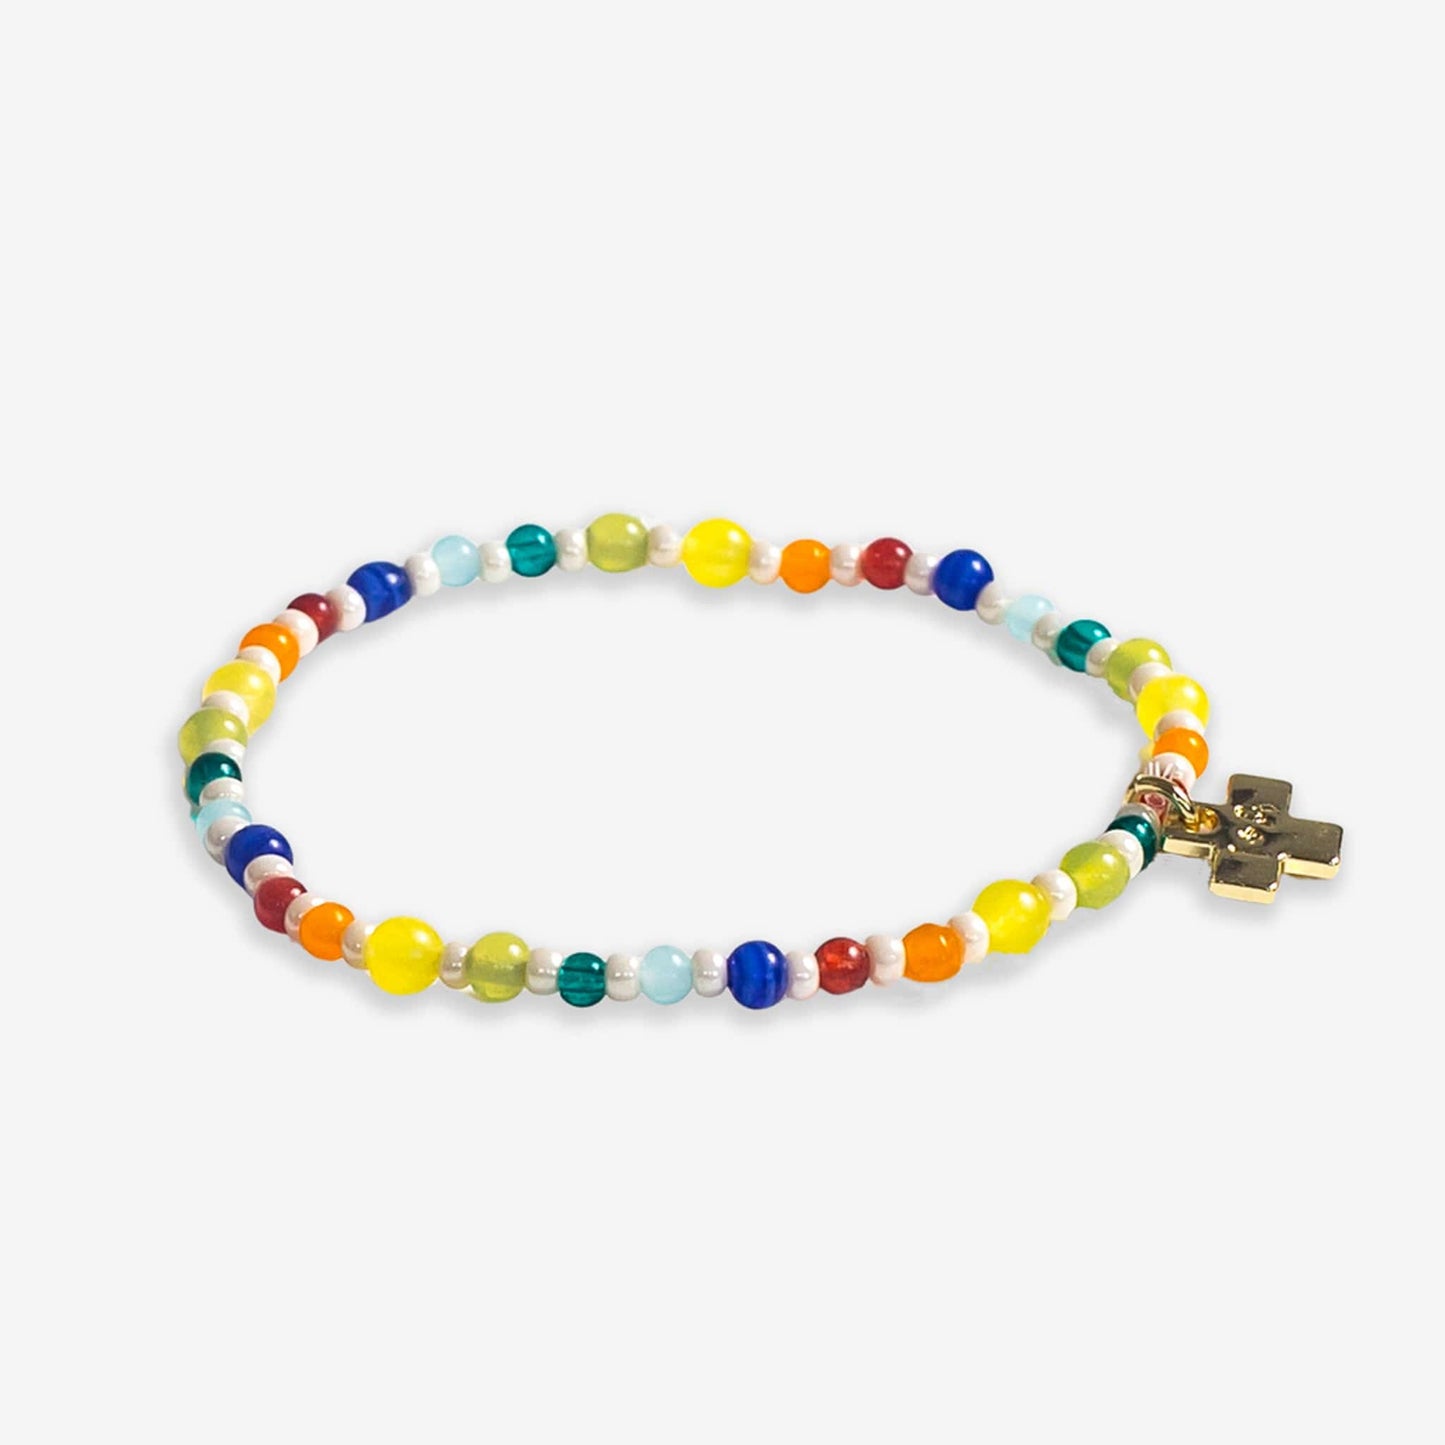 Sydney Mixed Beads And Stones Stretch Bracelet Rainbow